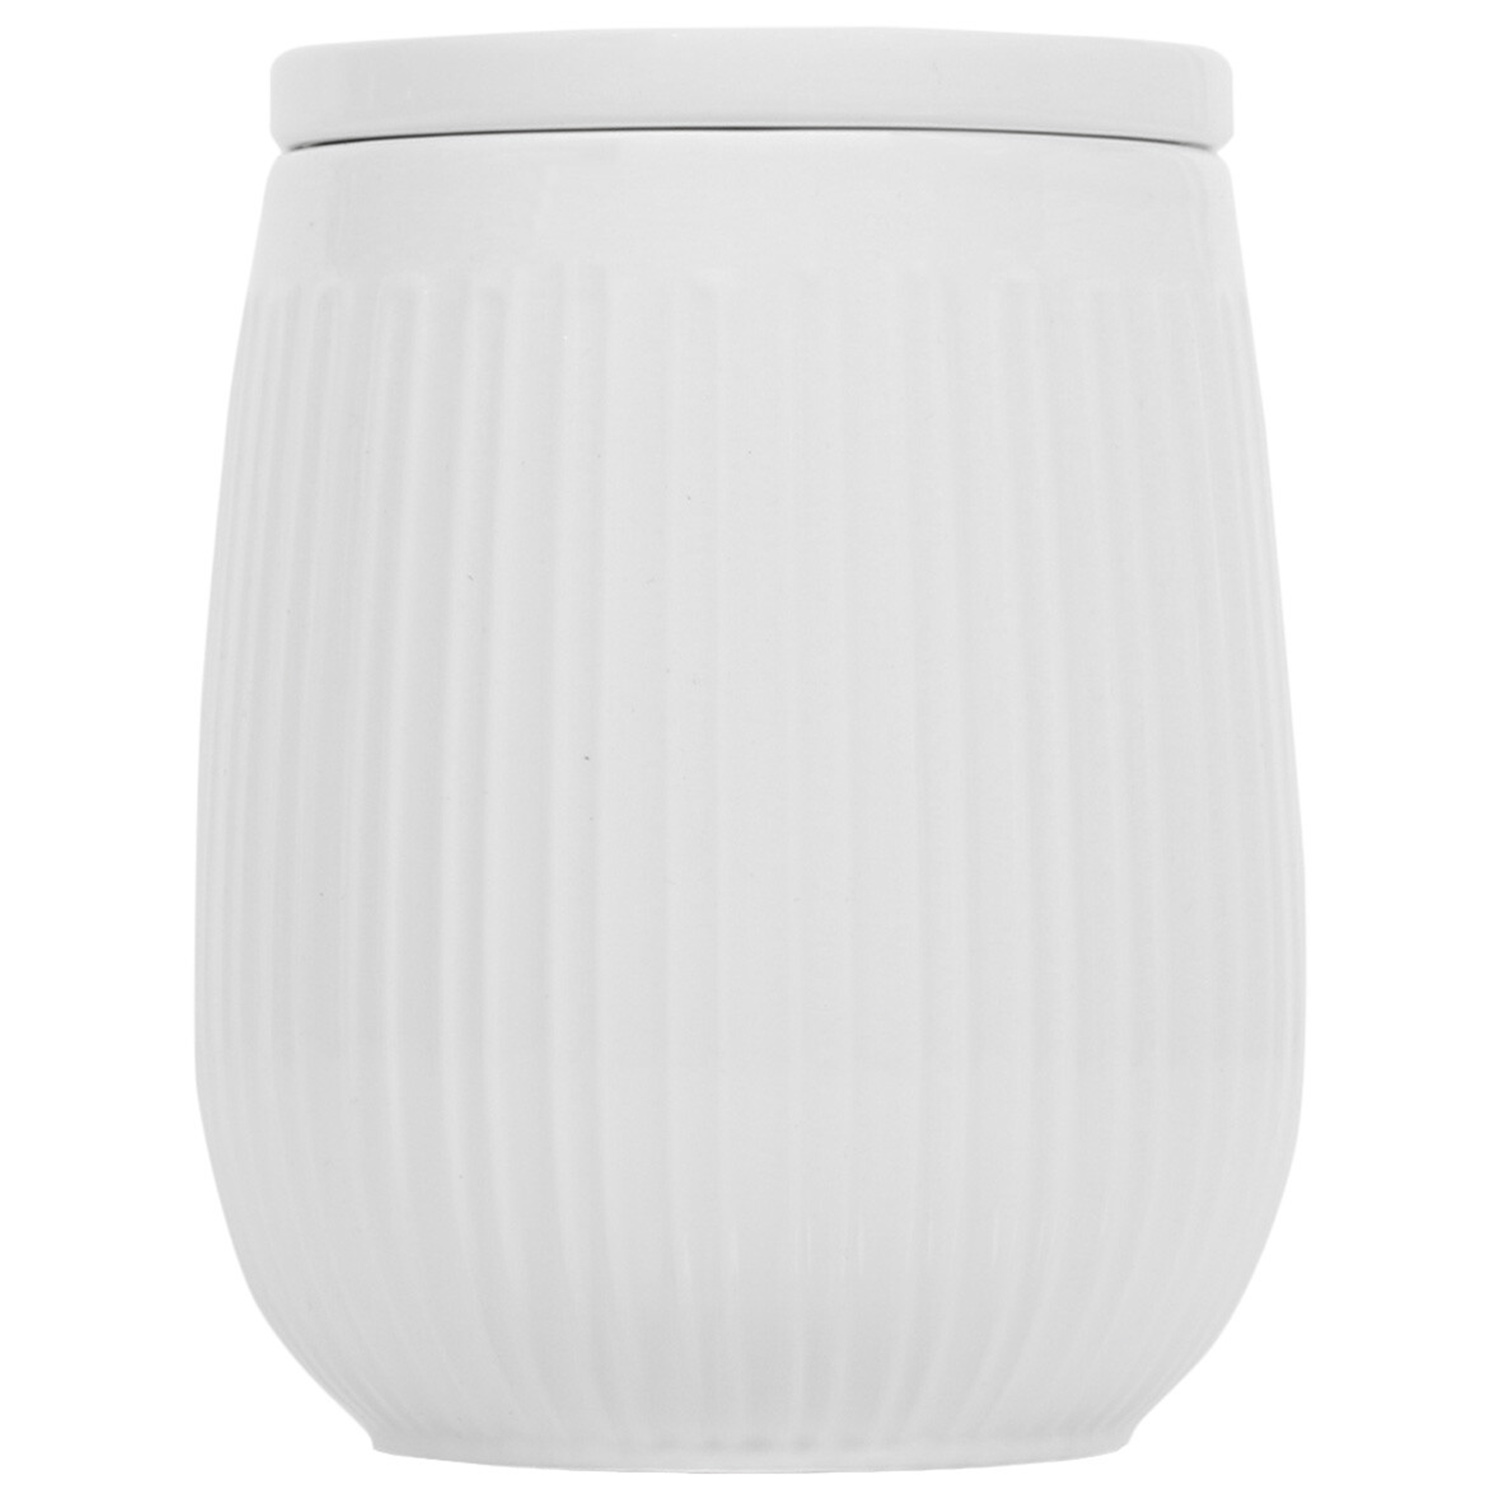 Adorn White Embossed Ceramic Canister Image